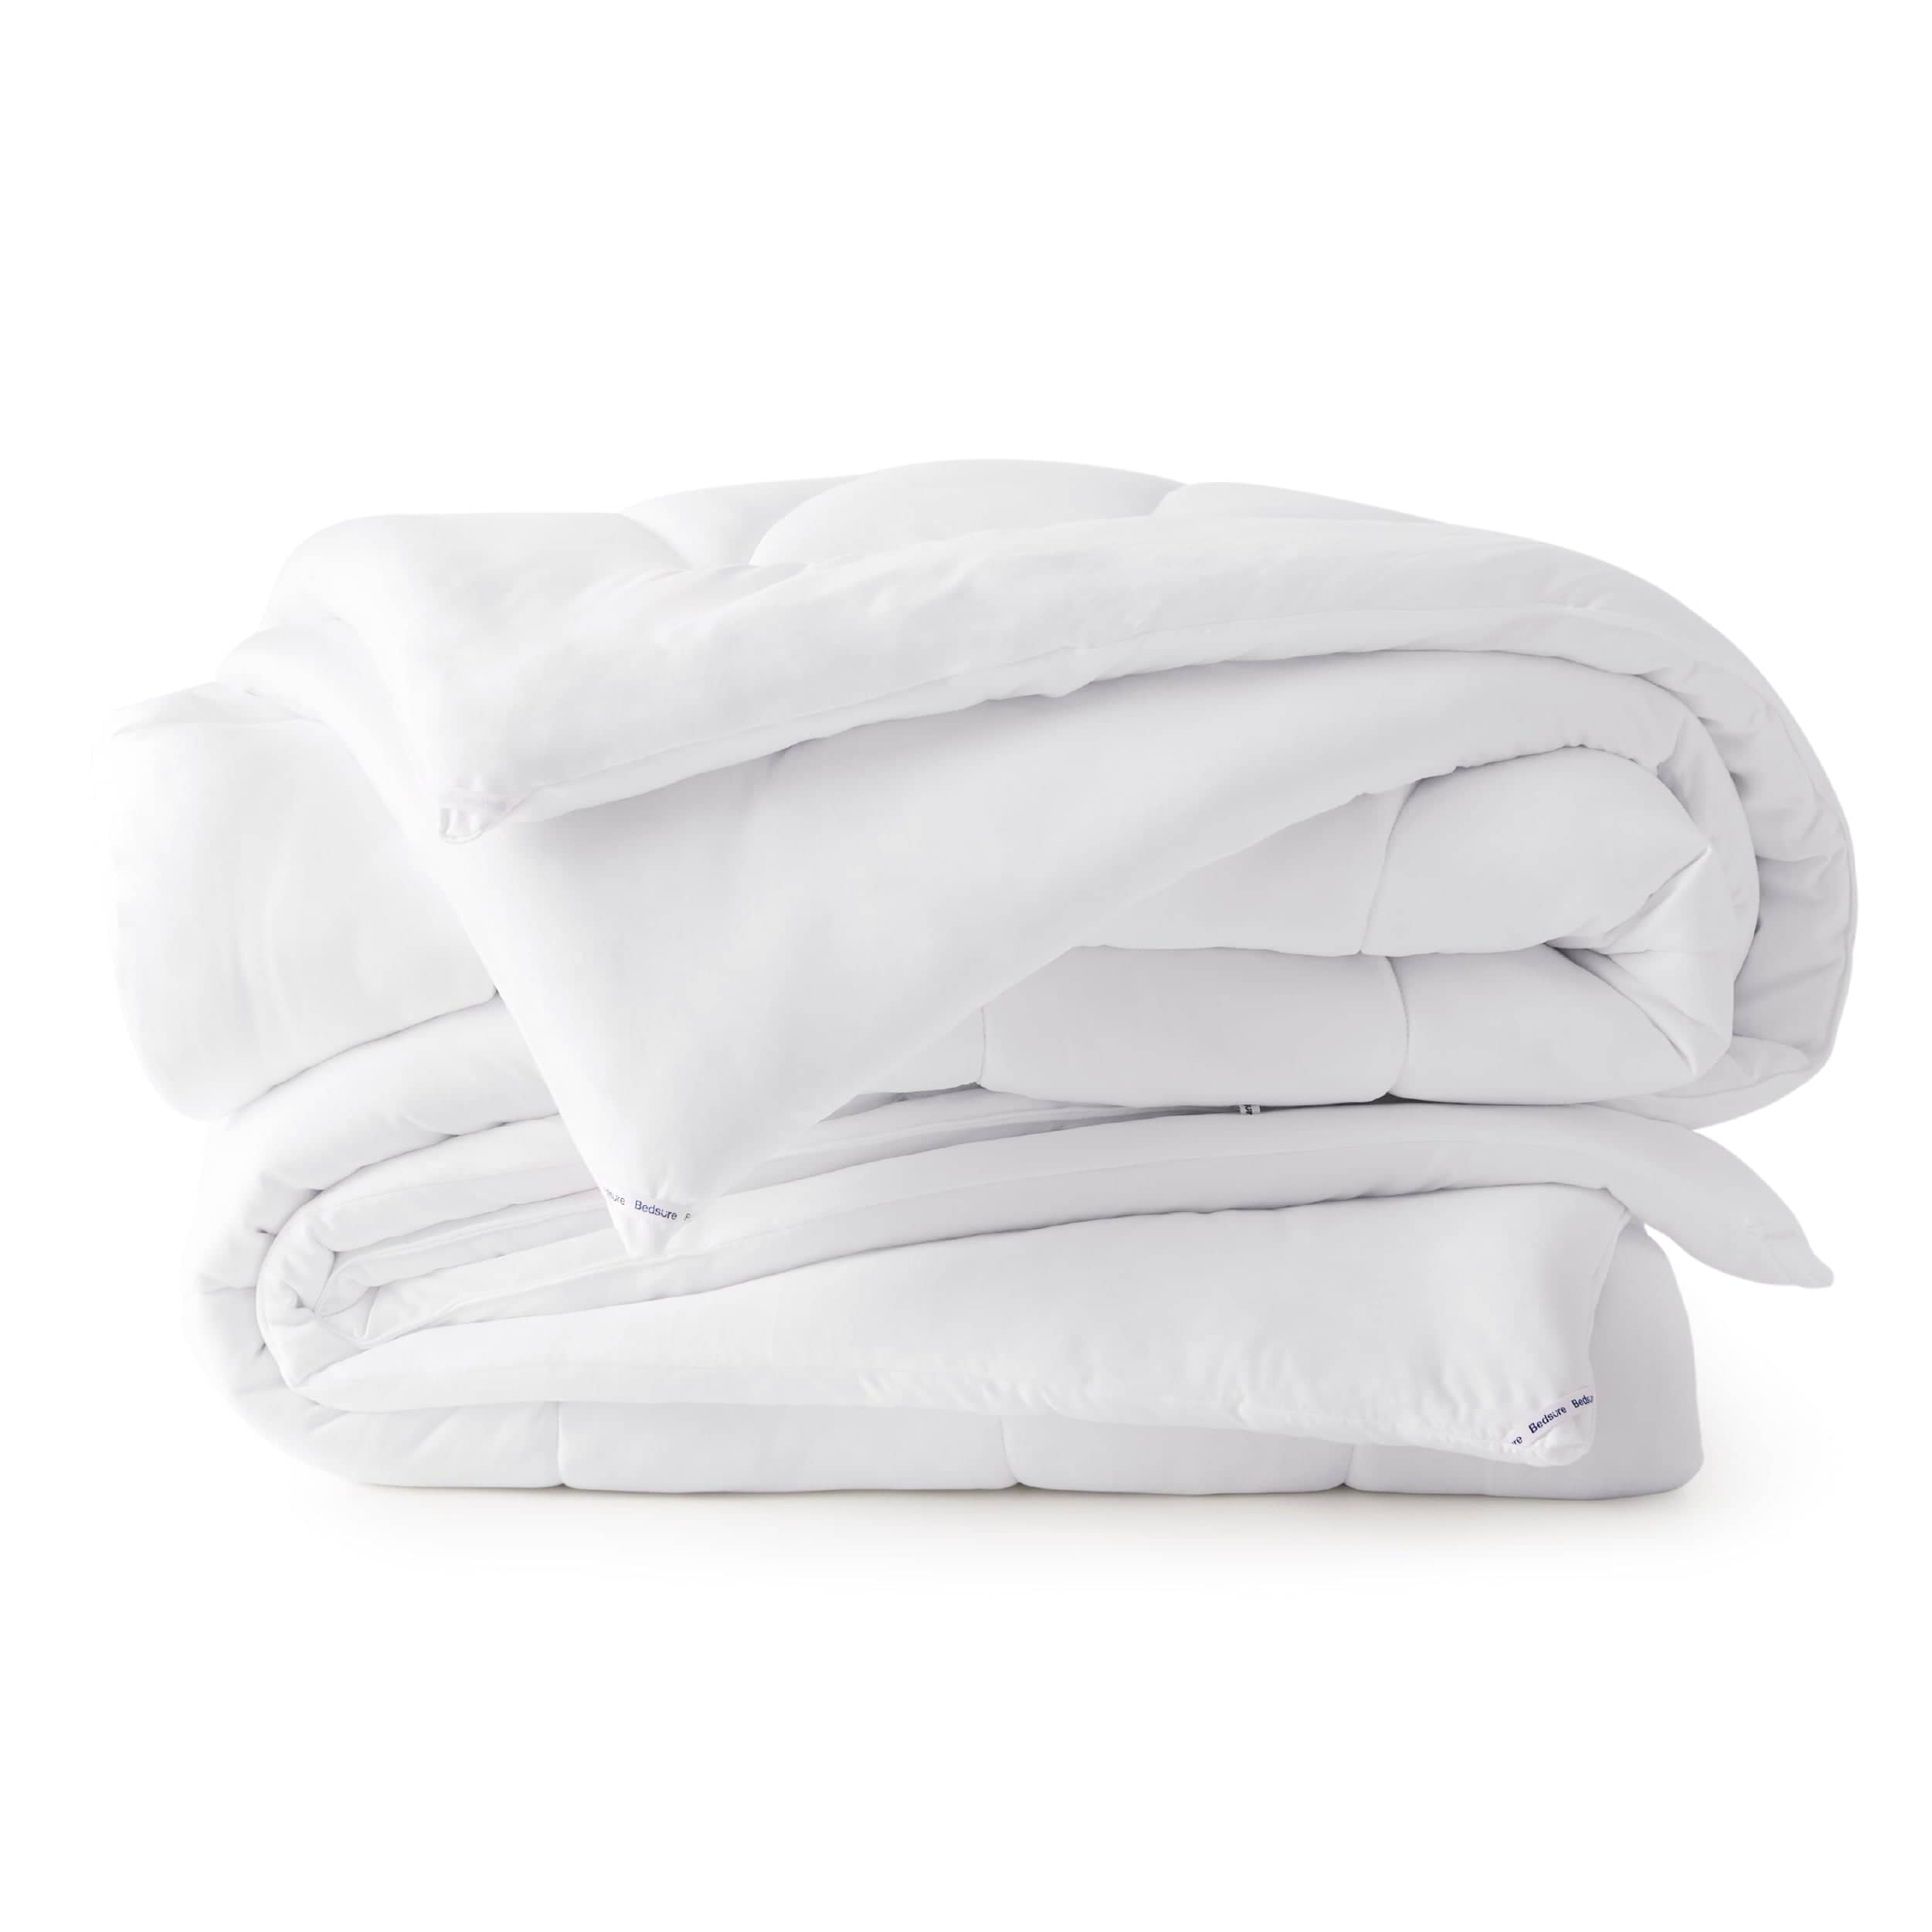 Bedsure Ultra Soft All Season 270gsm Comforter